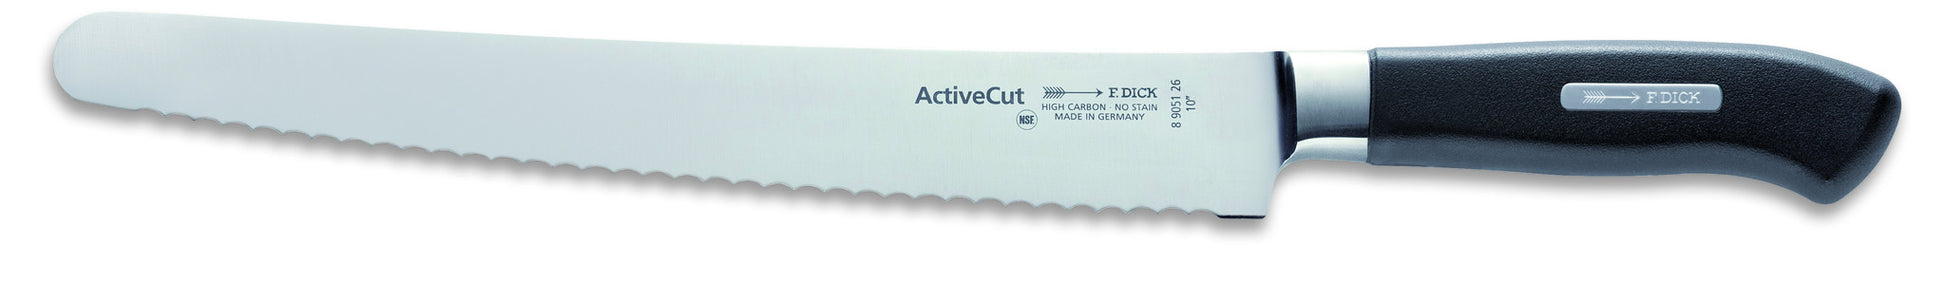 Active Cut Utility knife, 26cm - 89051-26 - CulinaryKraft